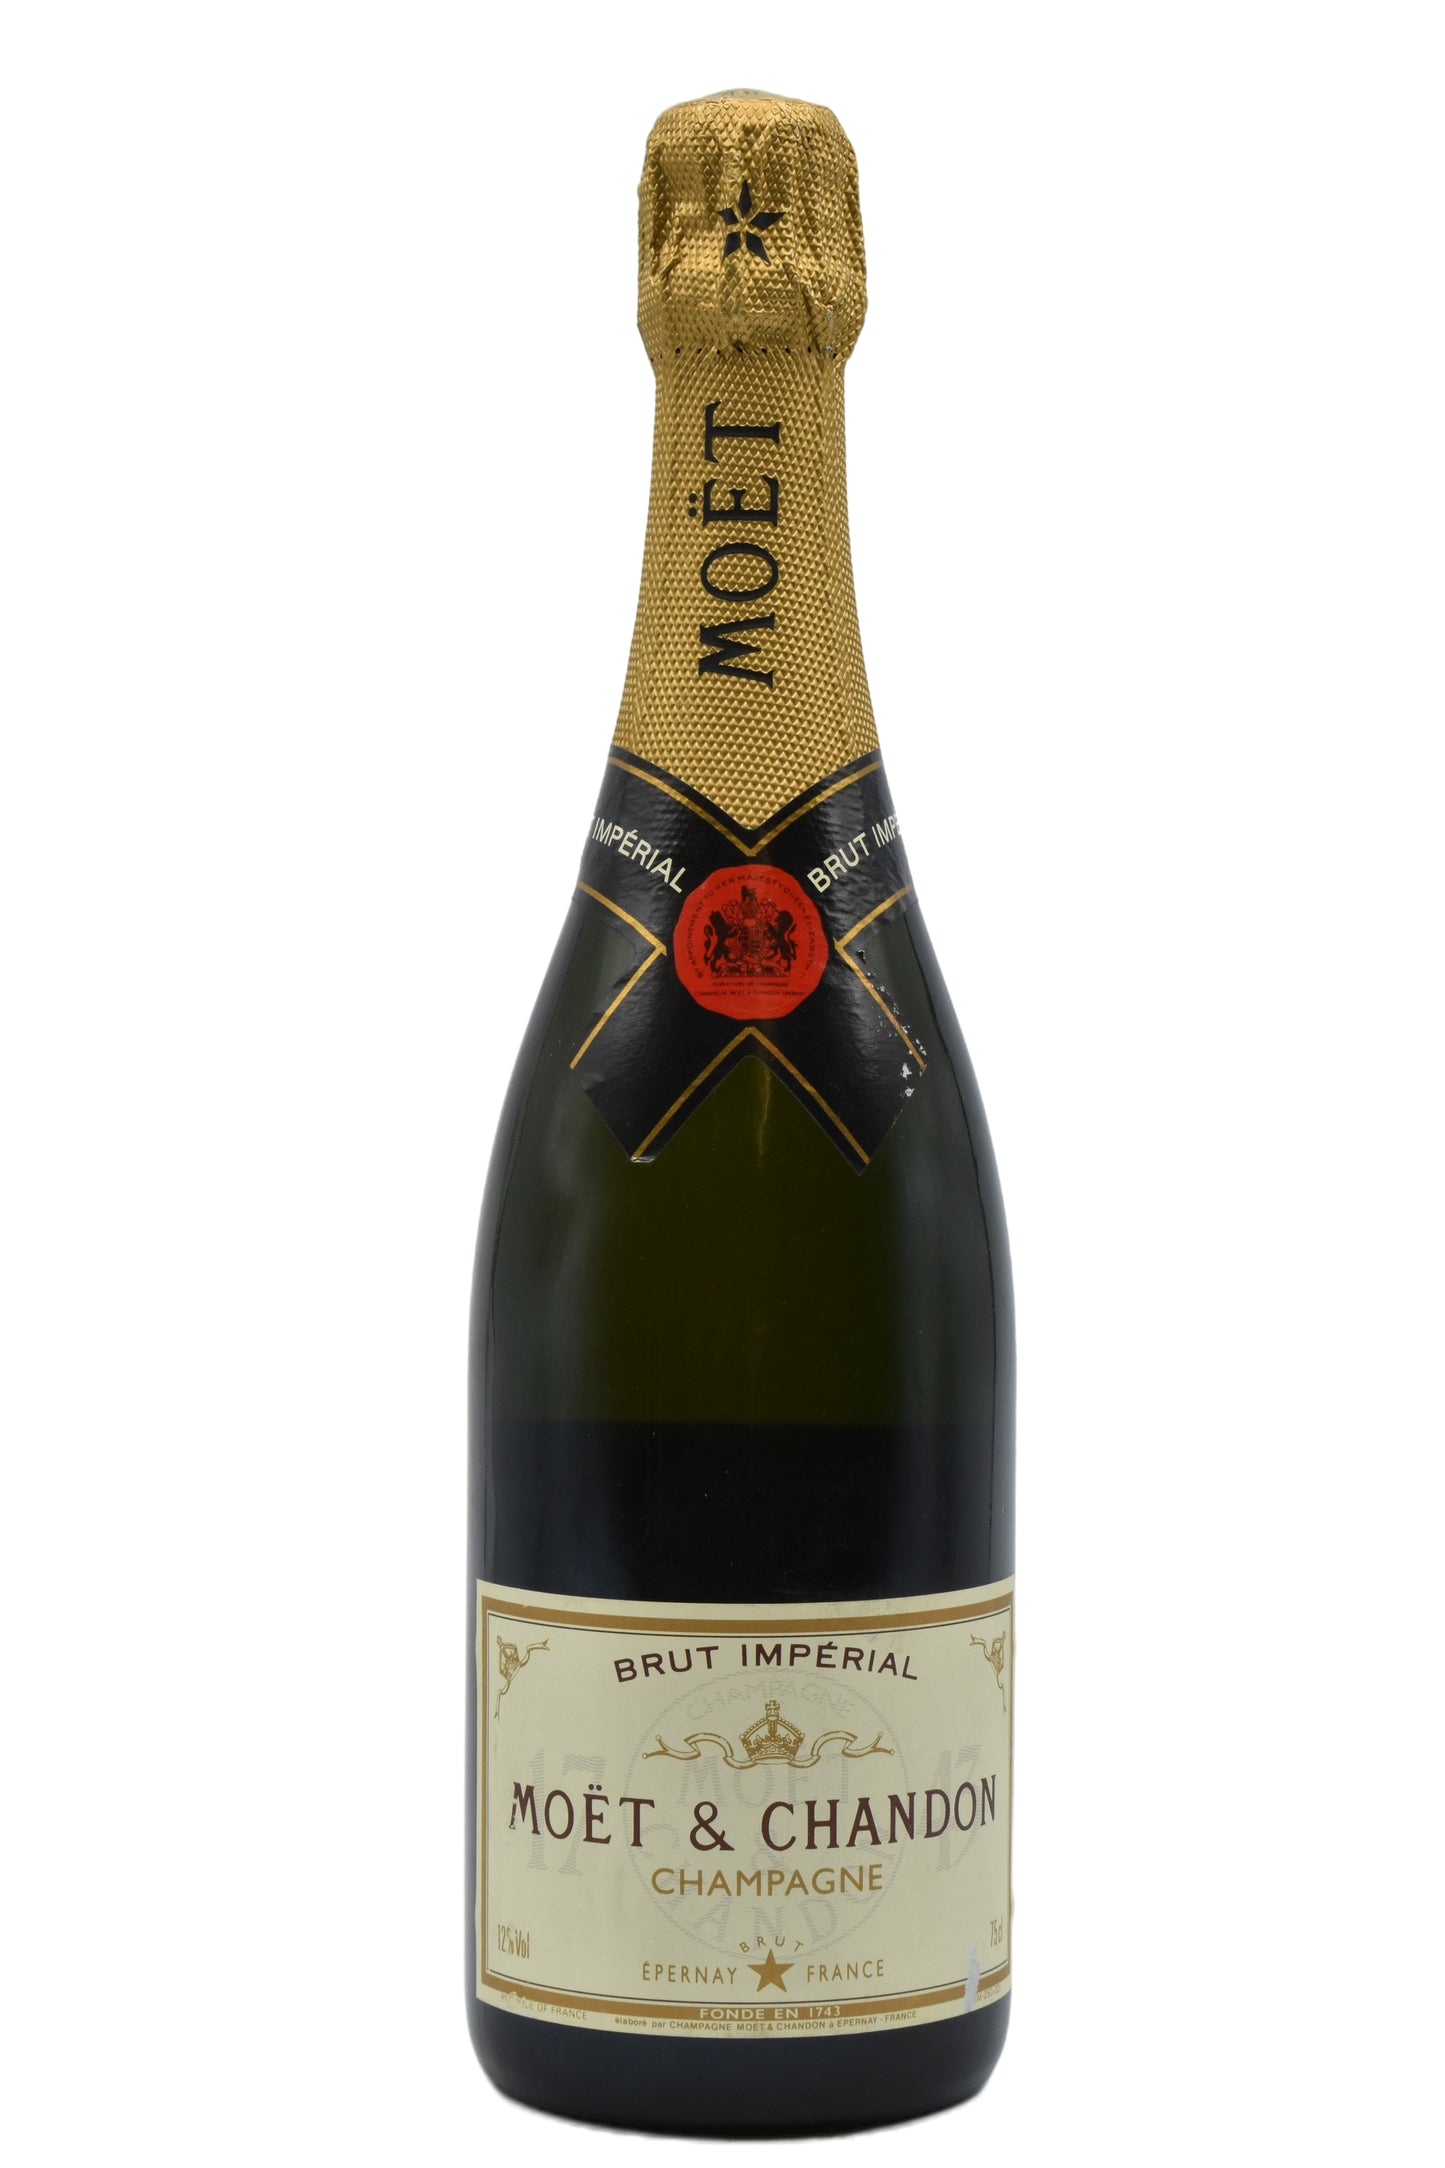 NV Moet & Chandon Brut Imperial (1980s) 750ml - Walker Wine Co.